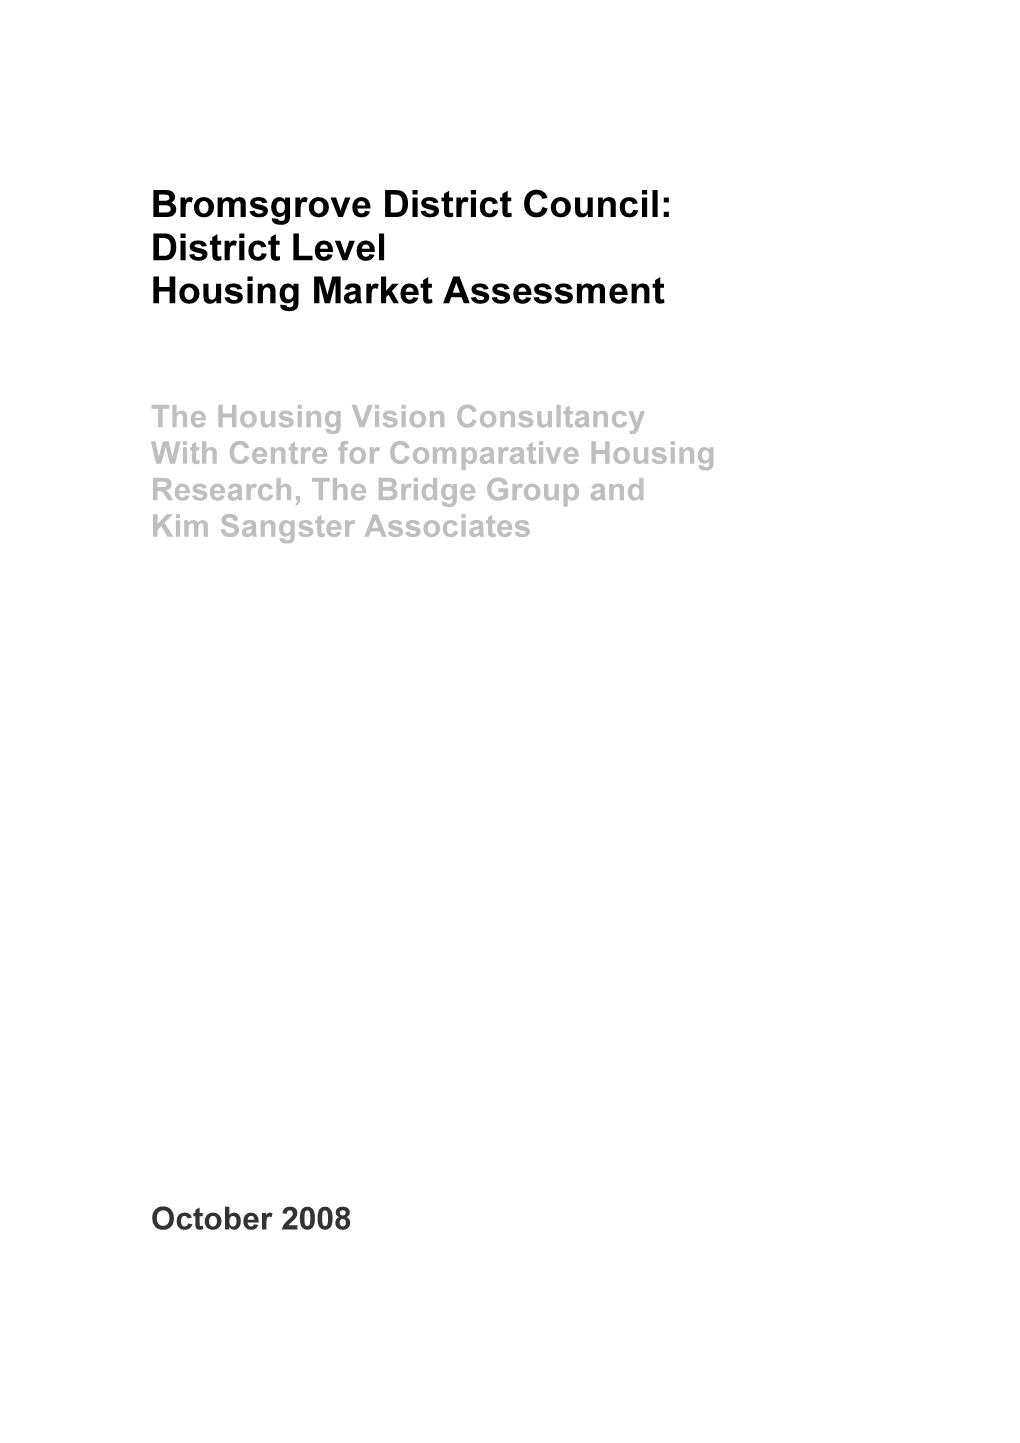 District Level Housing Market Assessment